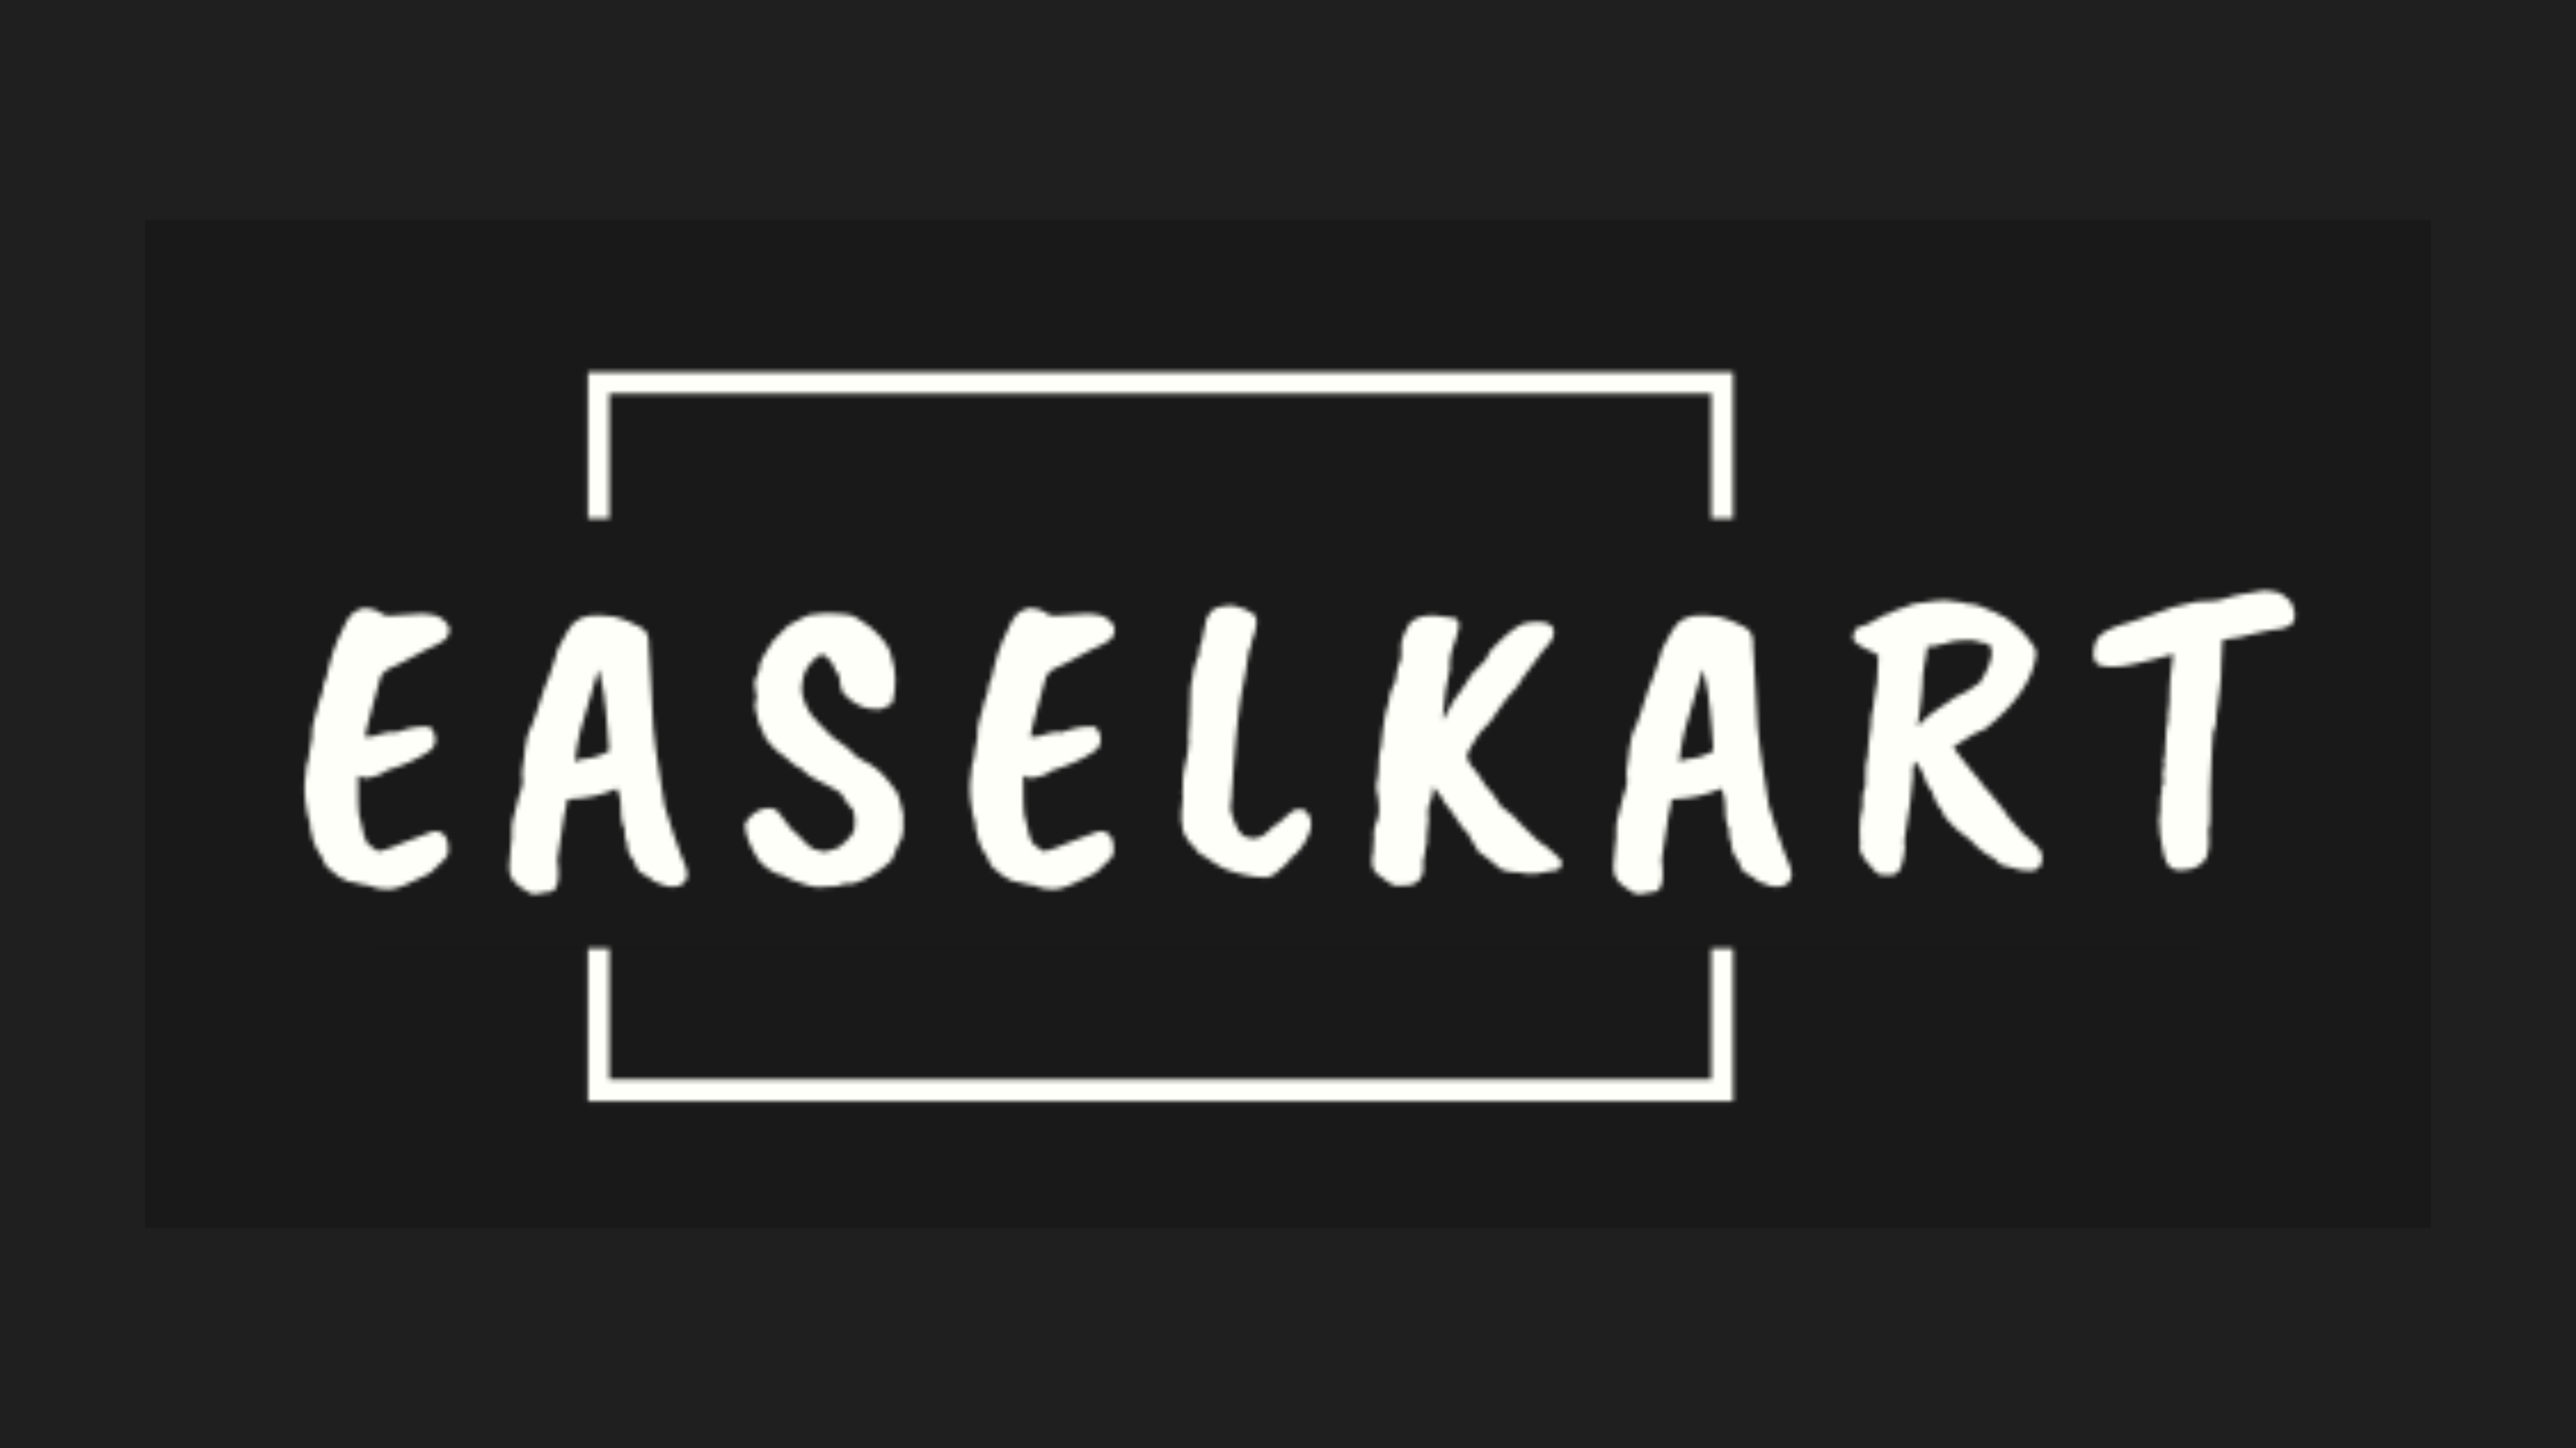 Easelkart Logo